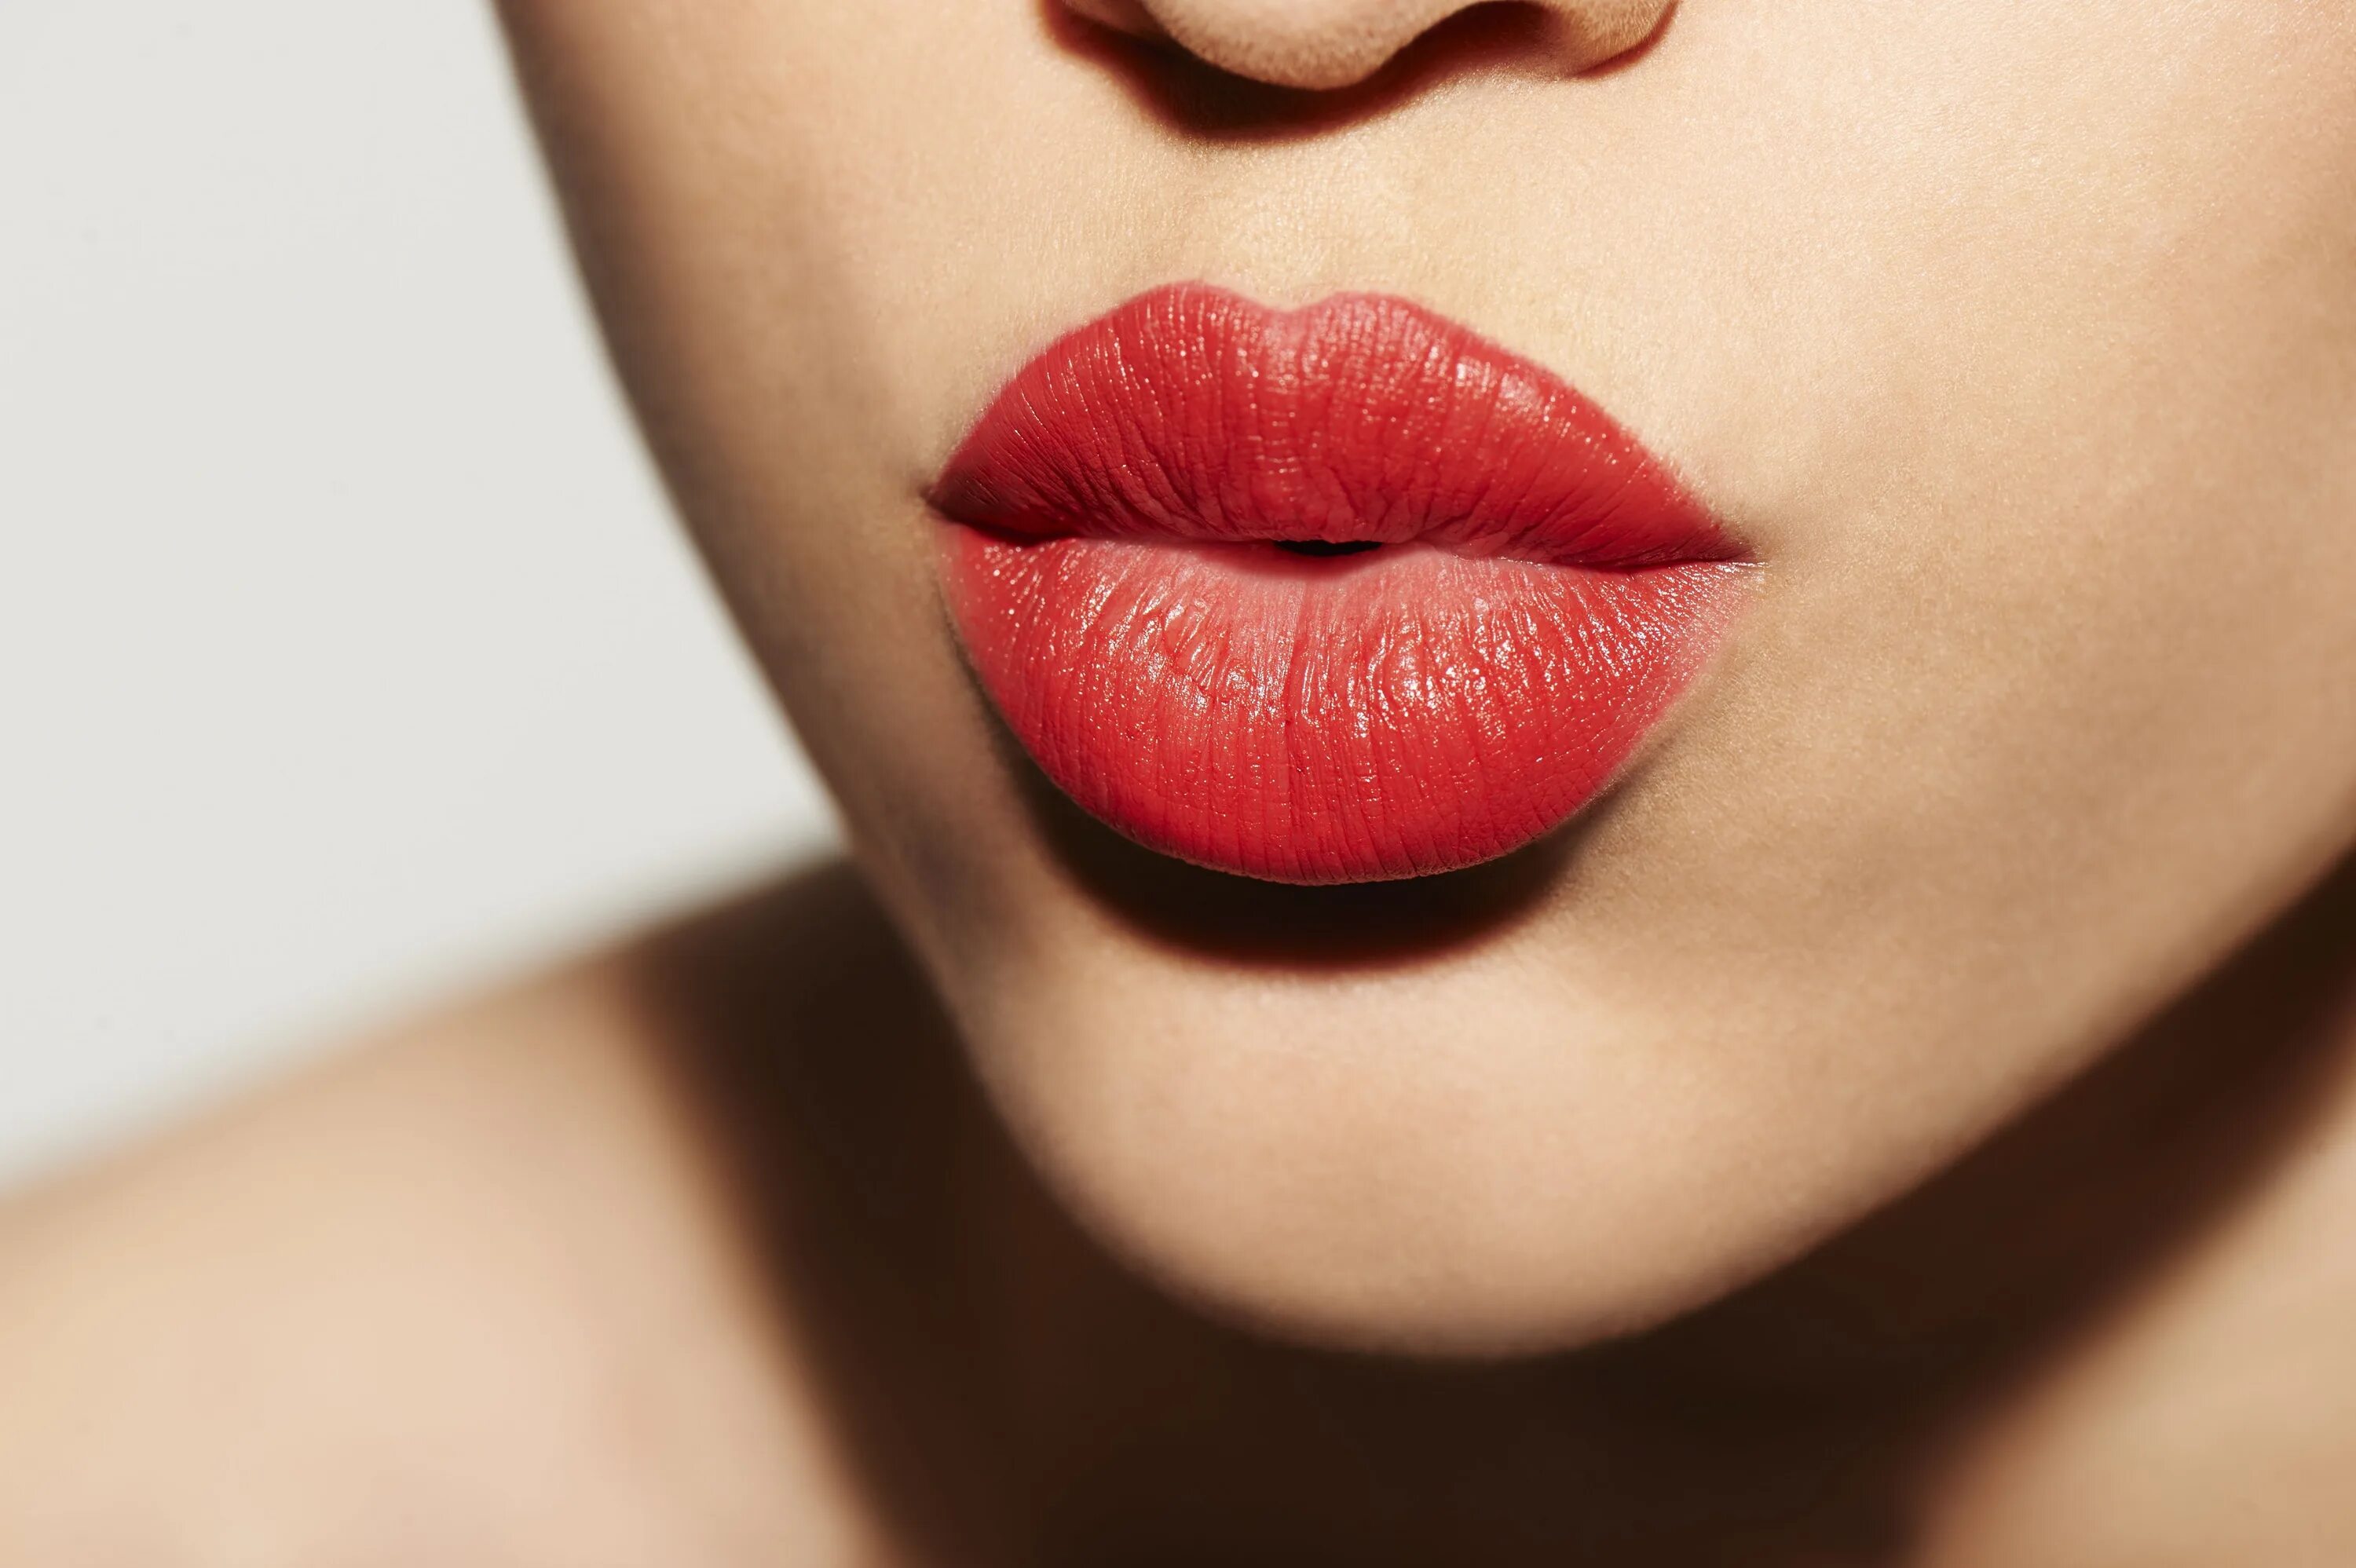 I love lips. Красивые губы. Женские губы. Губы девушки. Красивые губки.